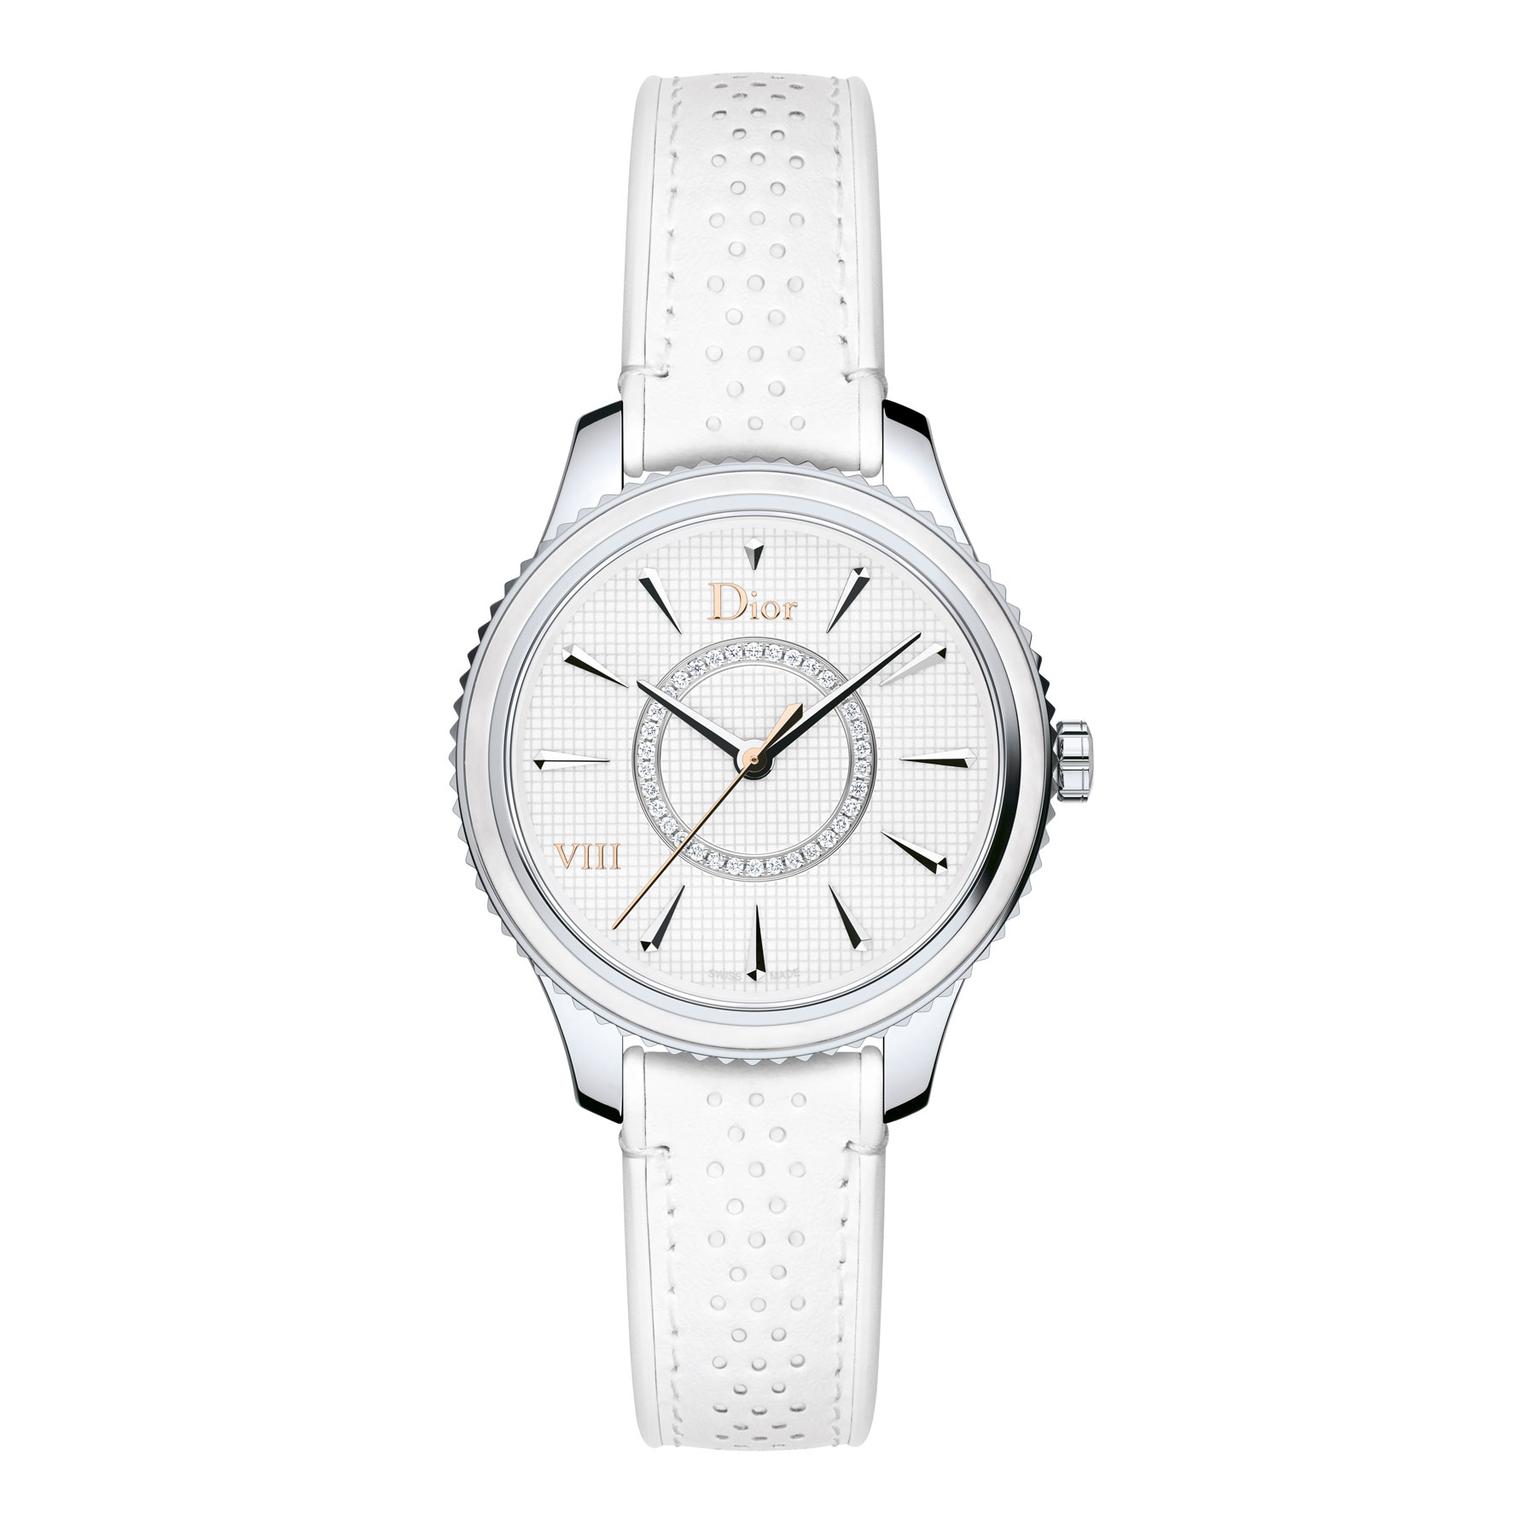 Dior VIII Montaige 2017 watch with piqué cotton dial